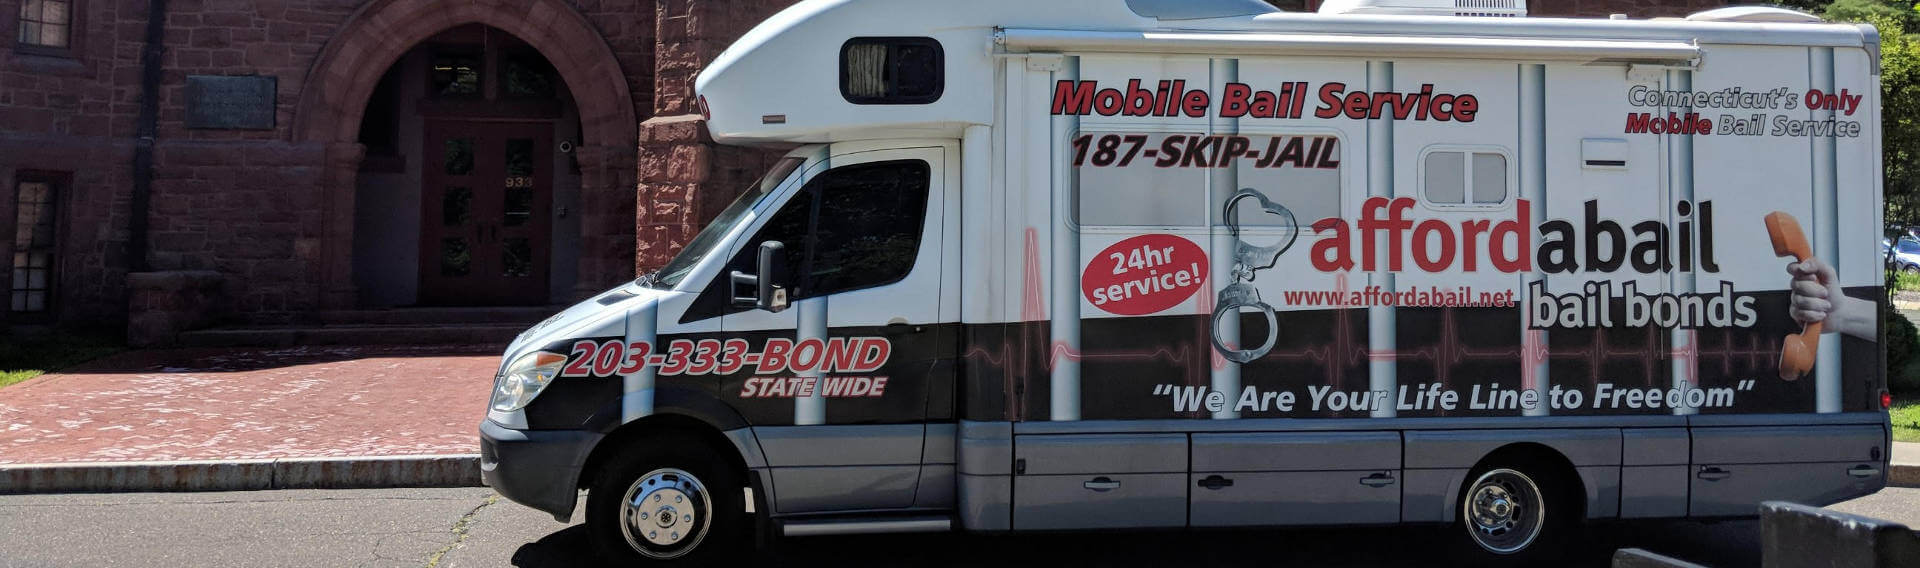 Mobile bail bonds service in Orange CT